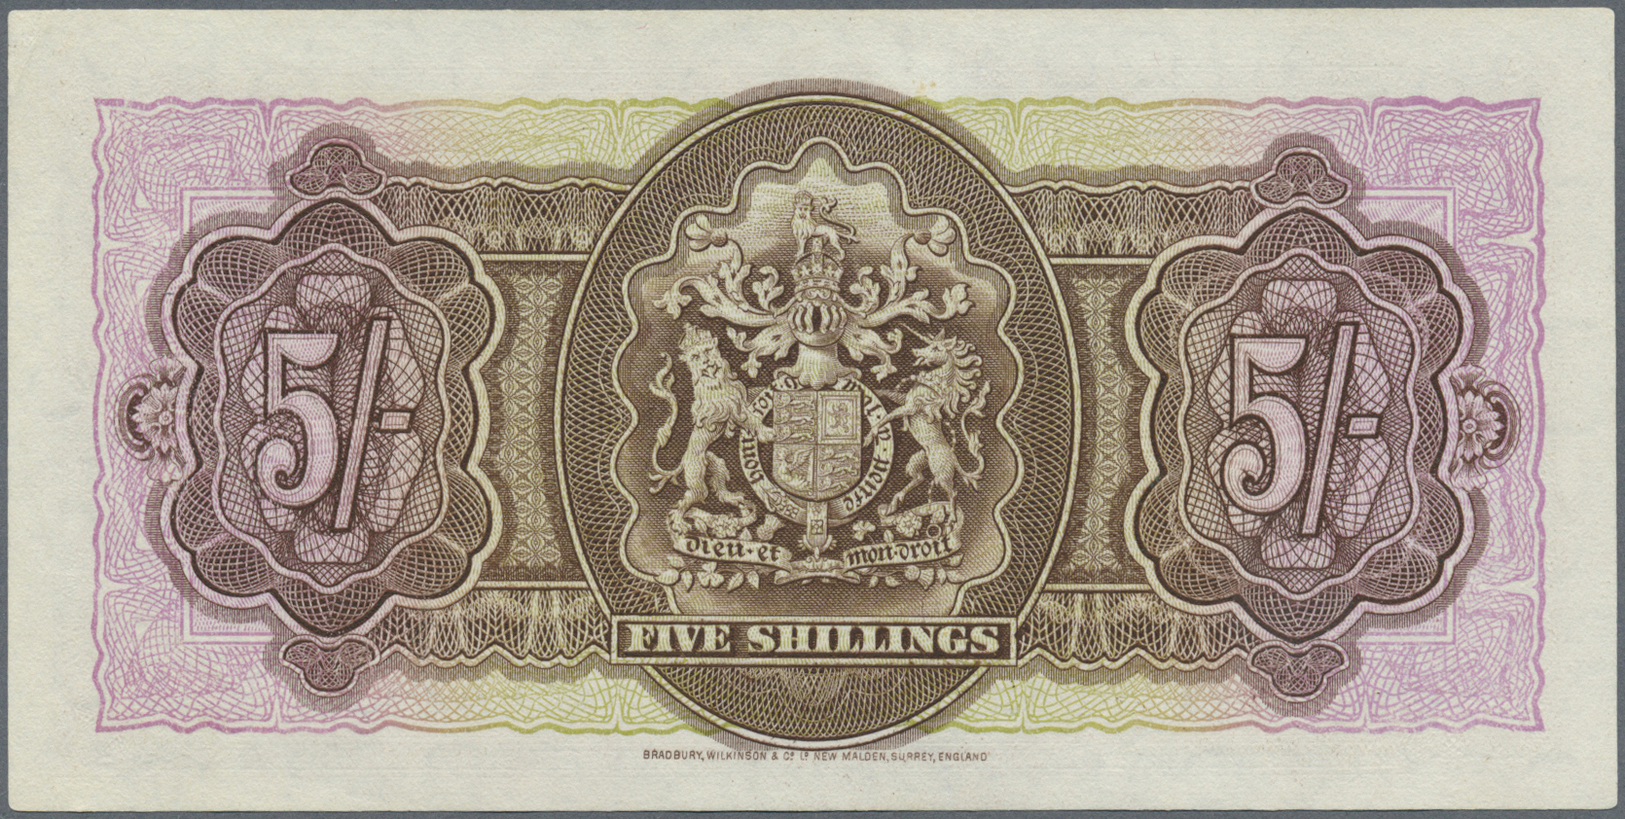 00297 Bermuda: 5 Shillings ND P. 8 In Condition: UNC. - Bermudas